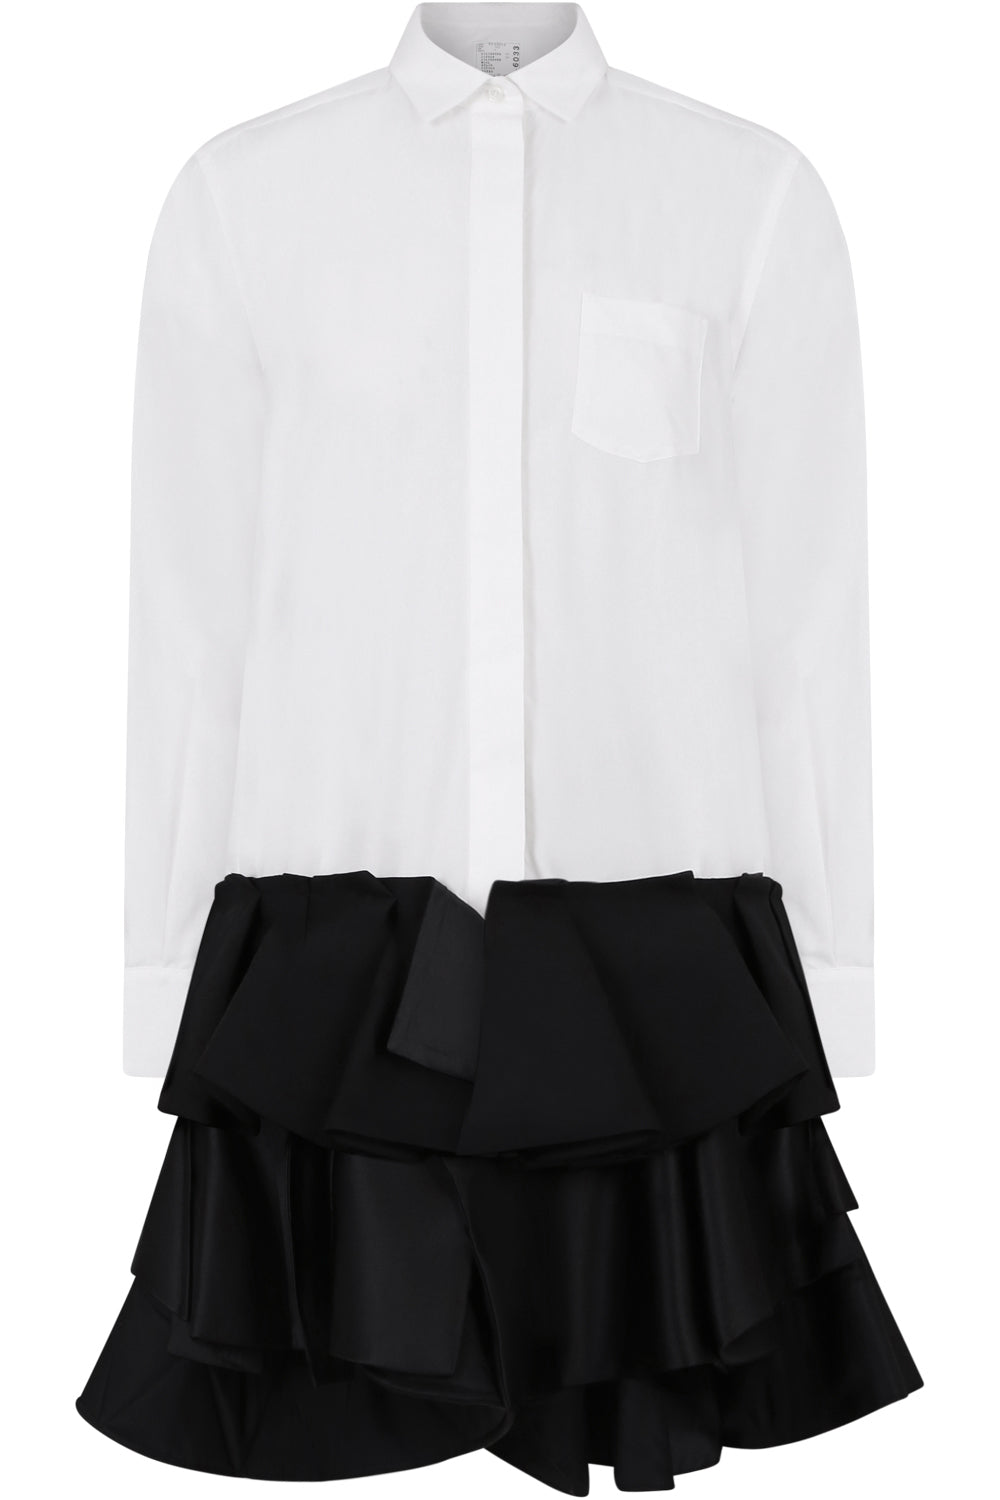 SACAI RTW L/S SHIRT DRESS WITH FRILL DETAIL WHITE/BLACK